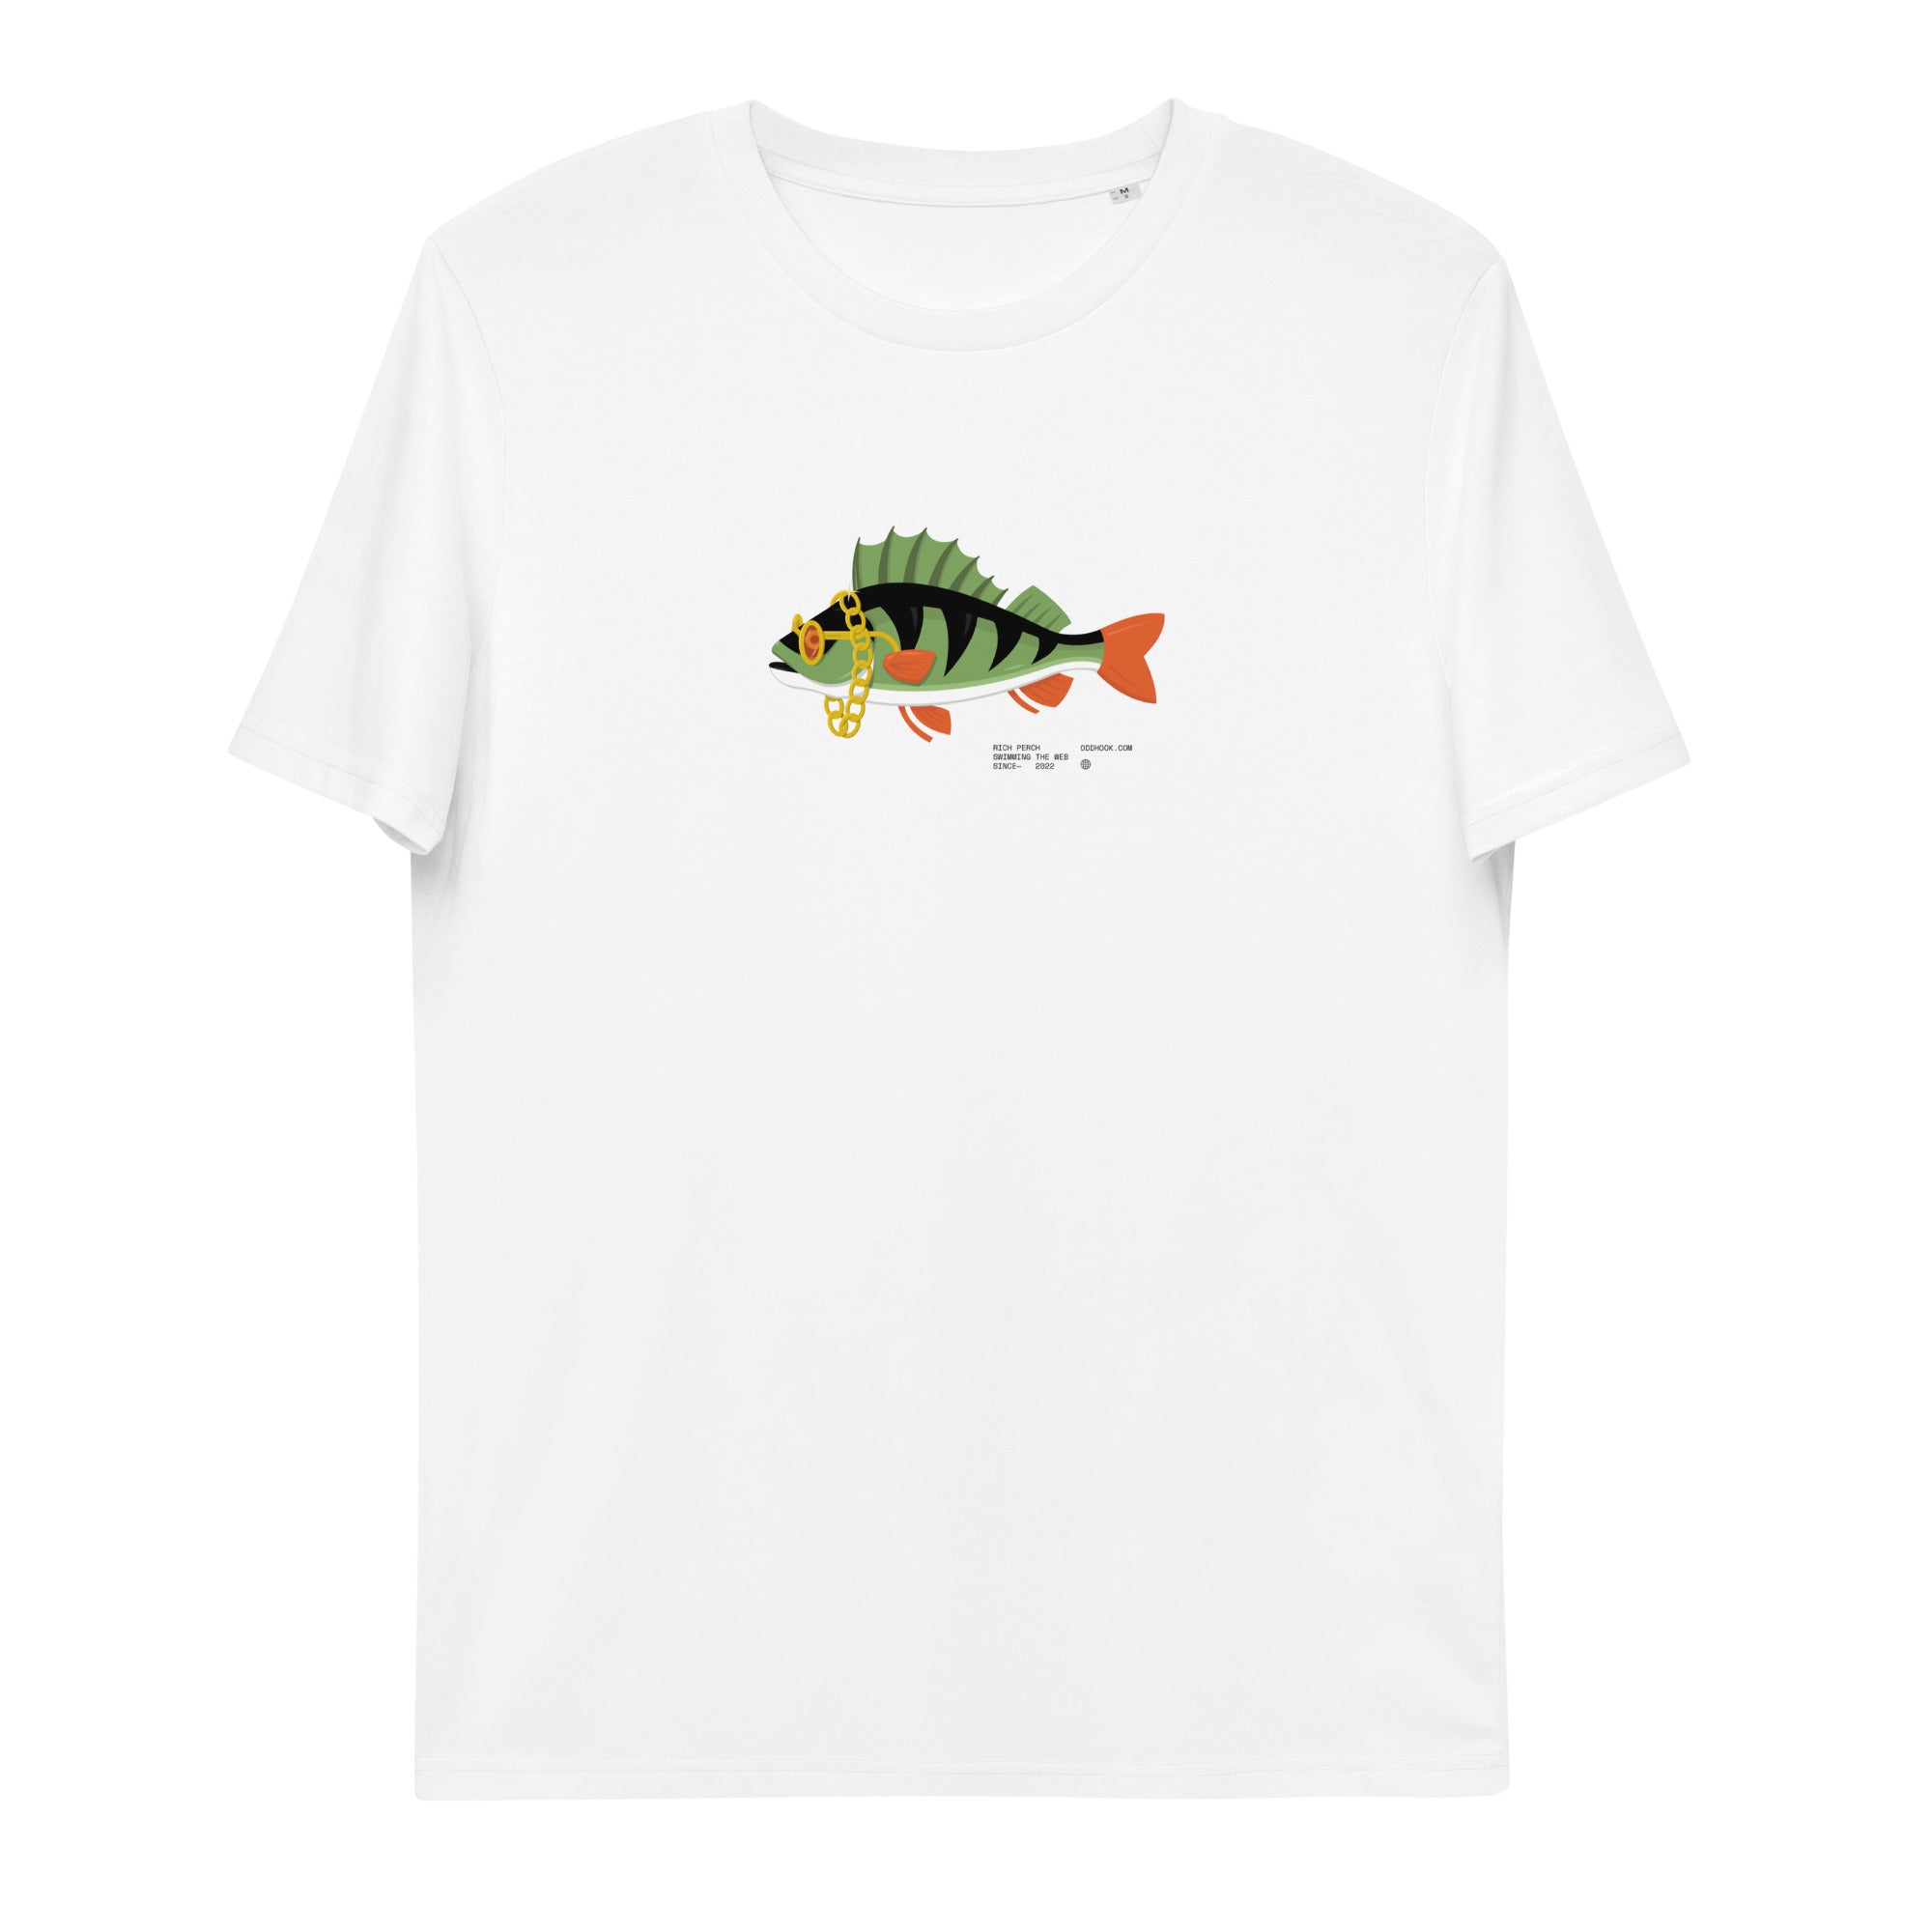 Rich Perch T-shirt - Oddhook